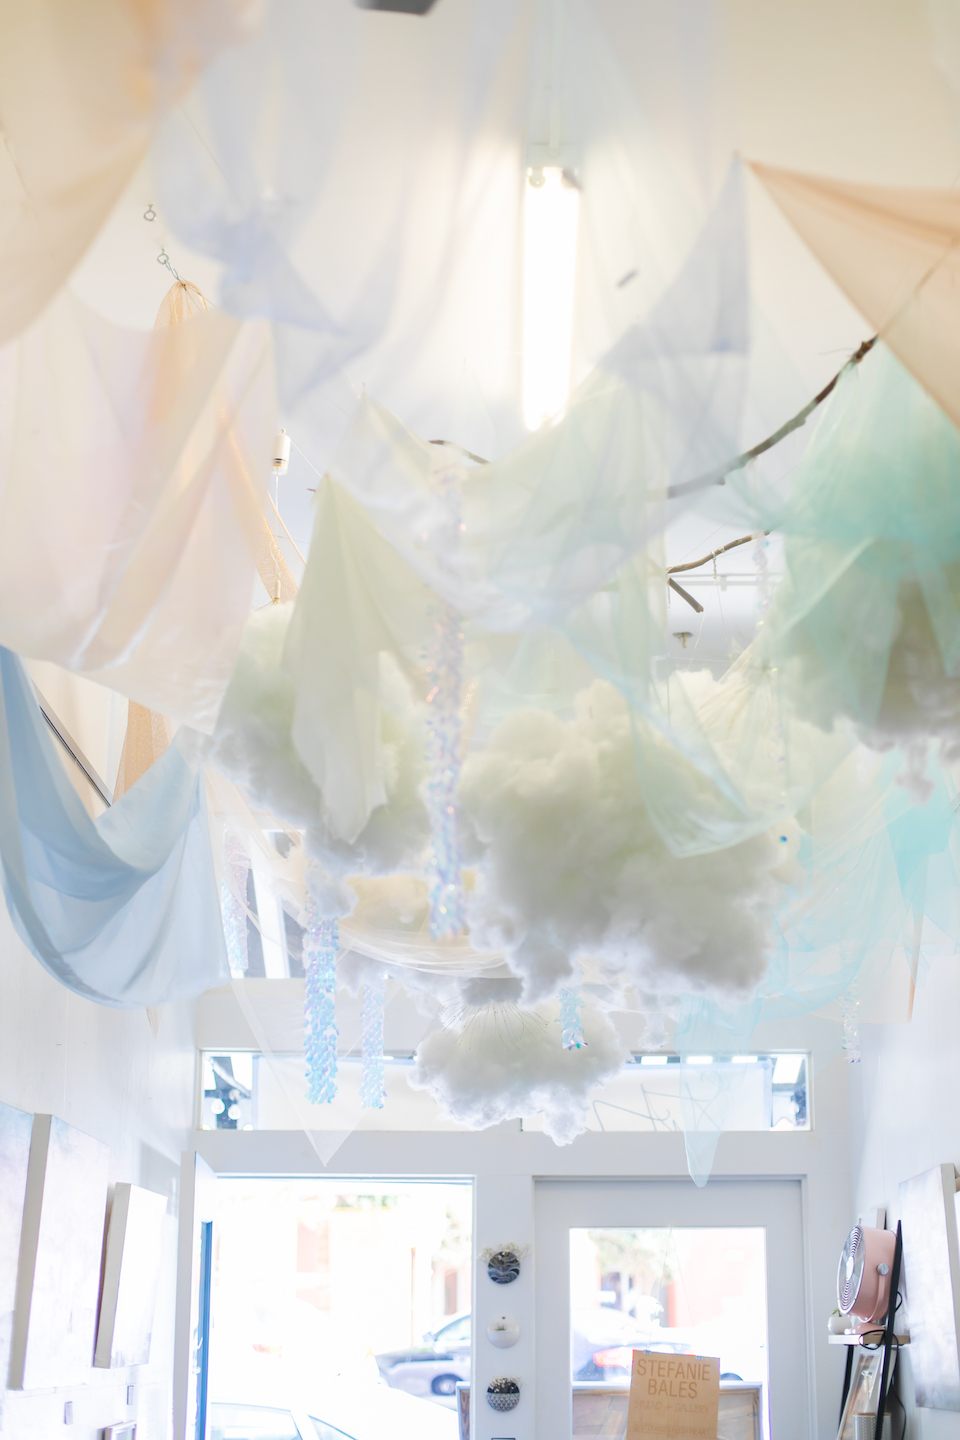 cloud dreams fabric art installation